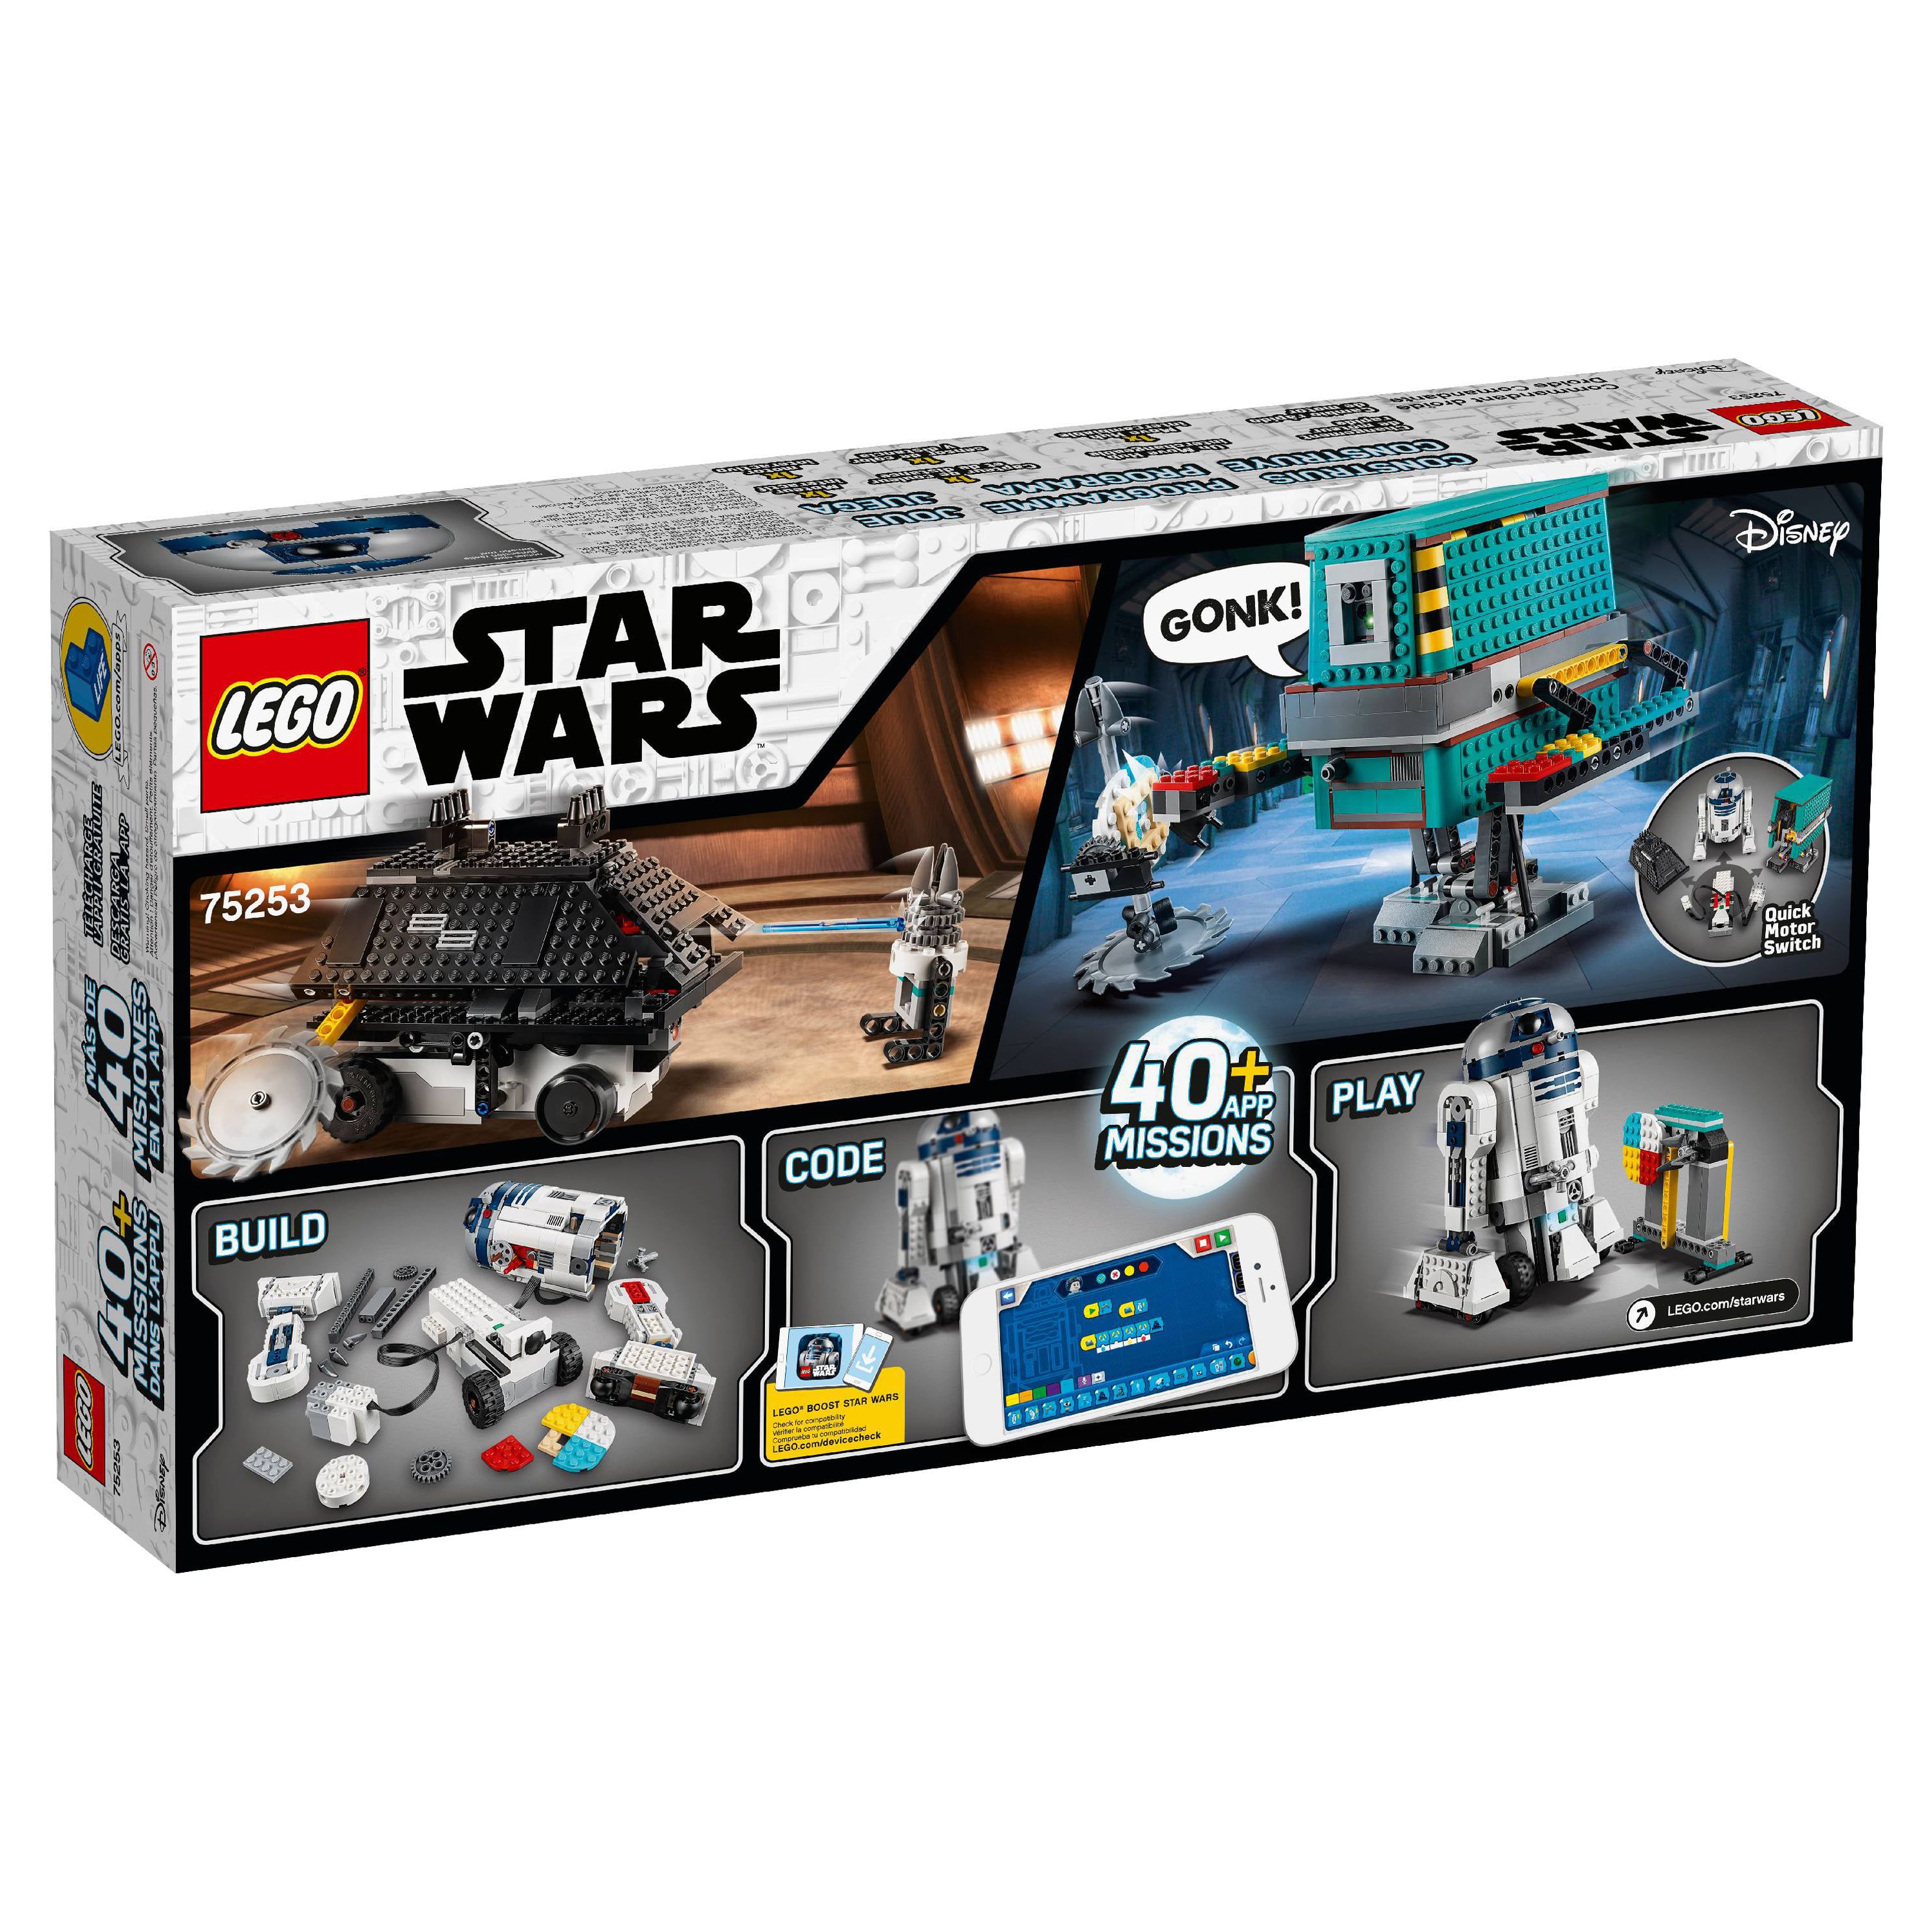 LEGO 75253 Star Wars Boost Droid Commander STEM Coding Educational Building Set for Kids - image 5 of 7